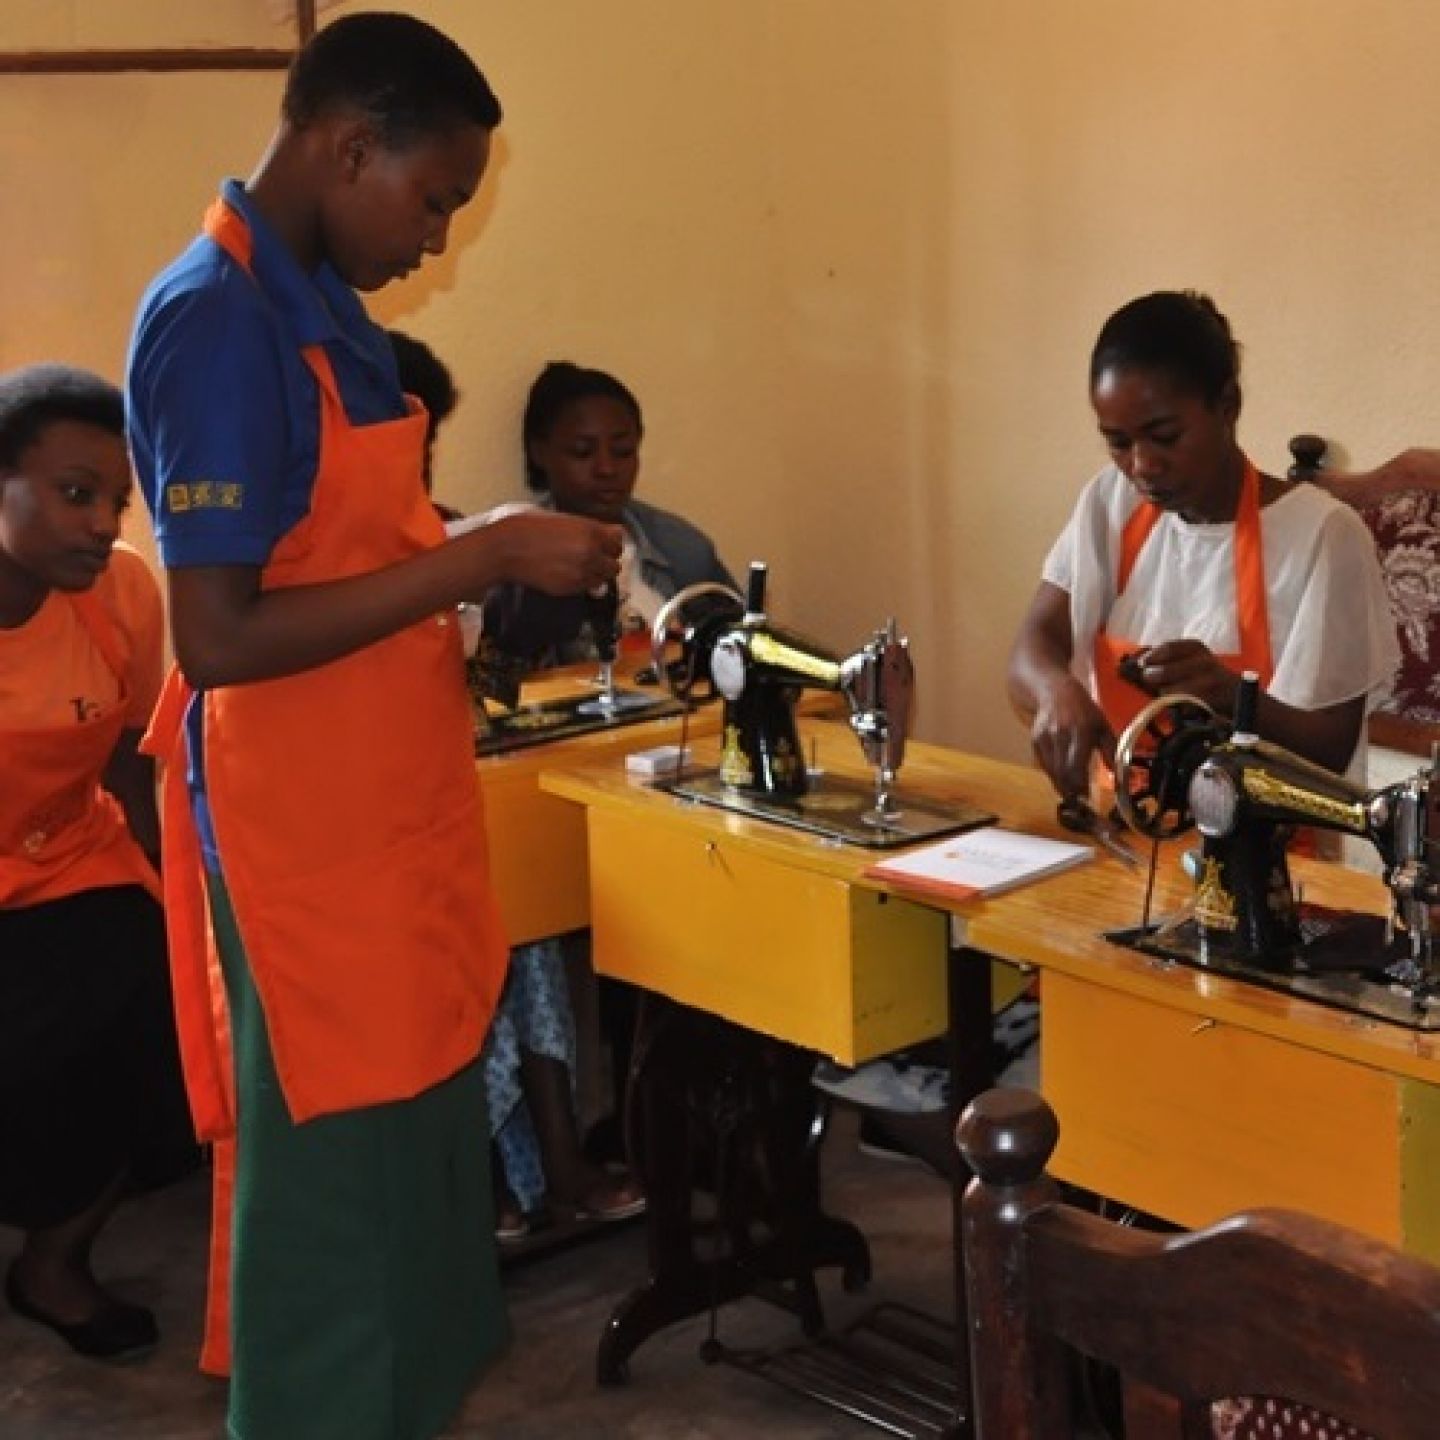 An image of Rwandan women sewing in a Rwandan classroom.